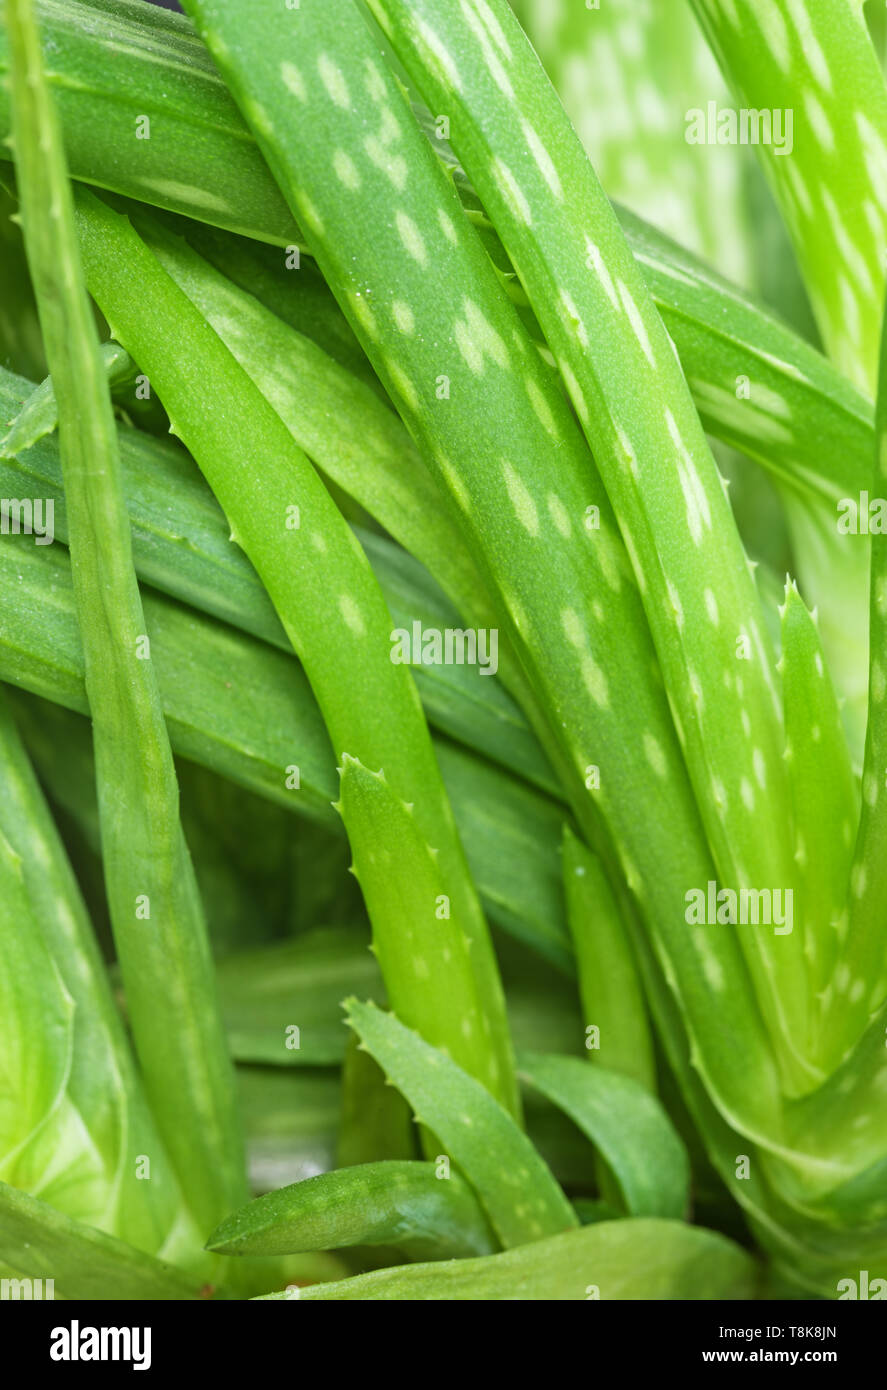 Grün Aloe Vera Pflanze Blätter Hintergrund mit selektiven Fokus Stockfoto